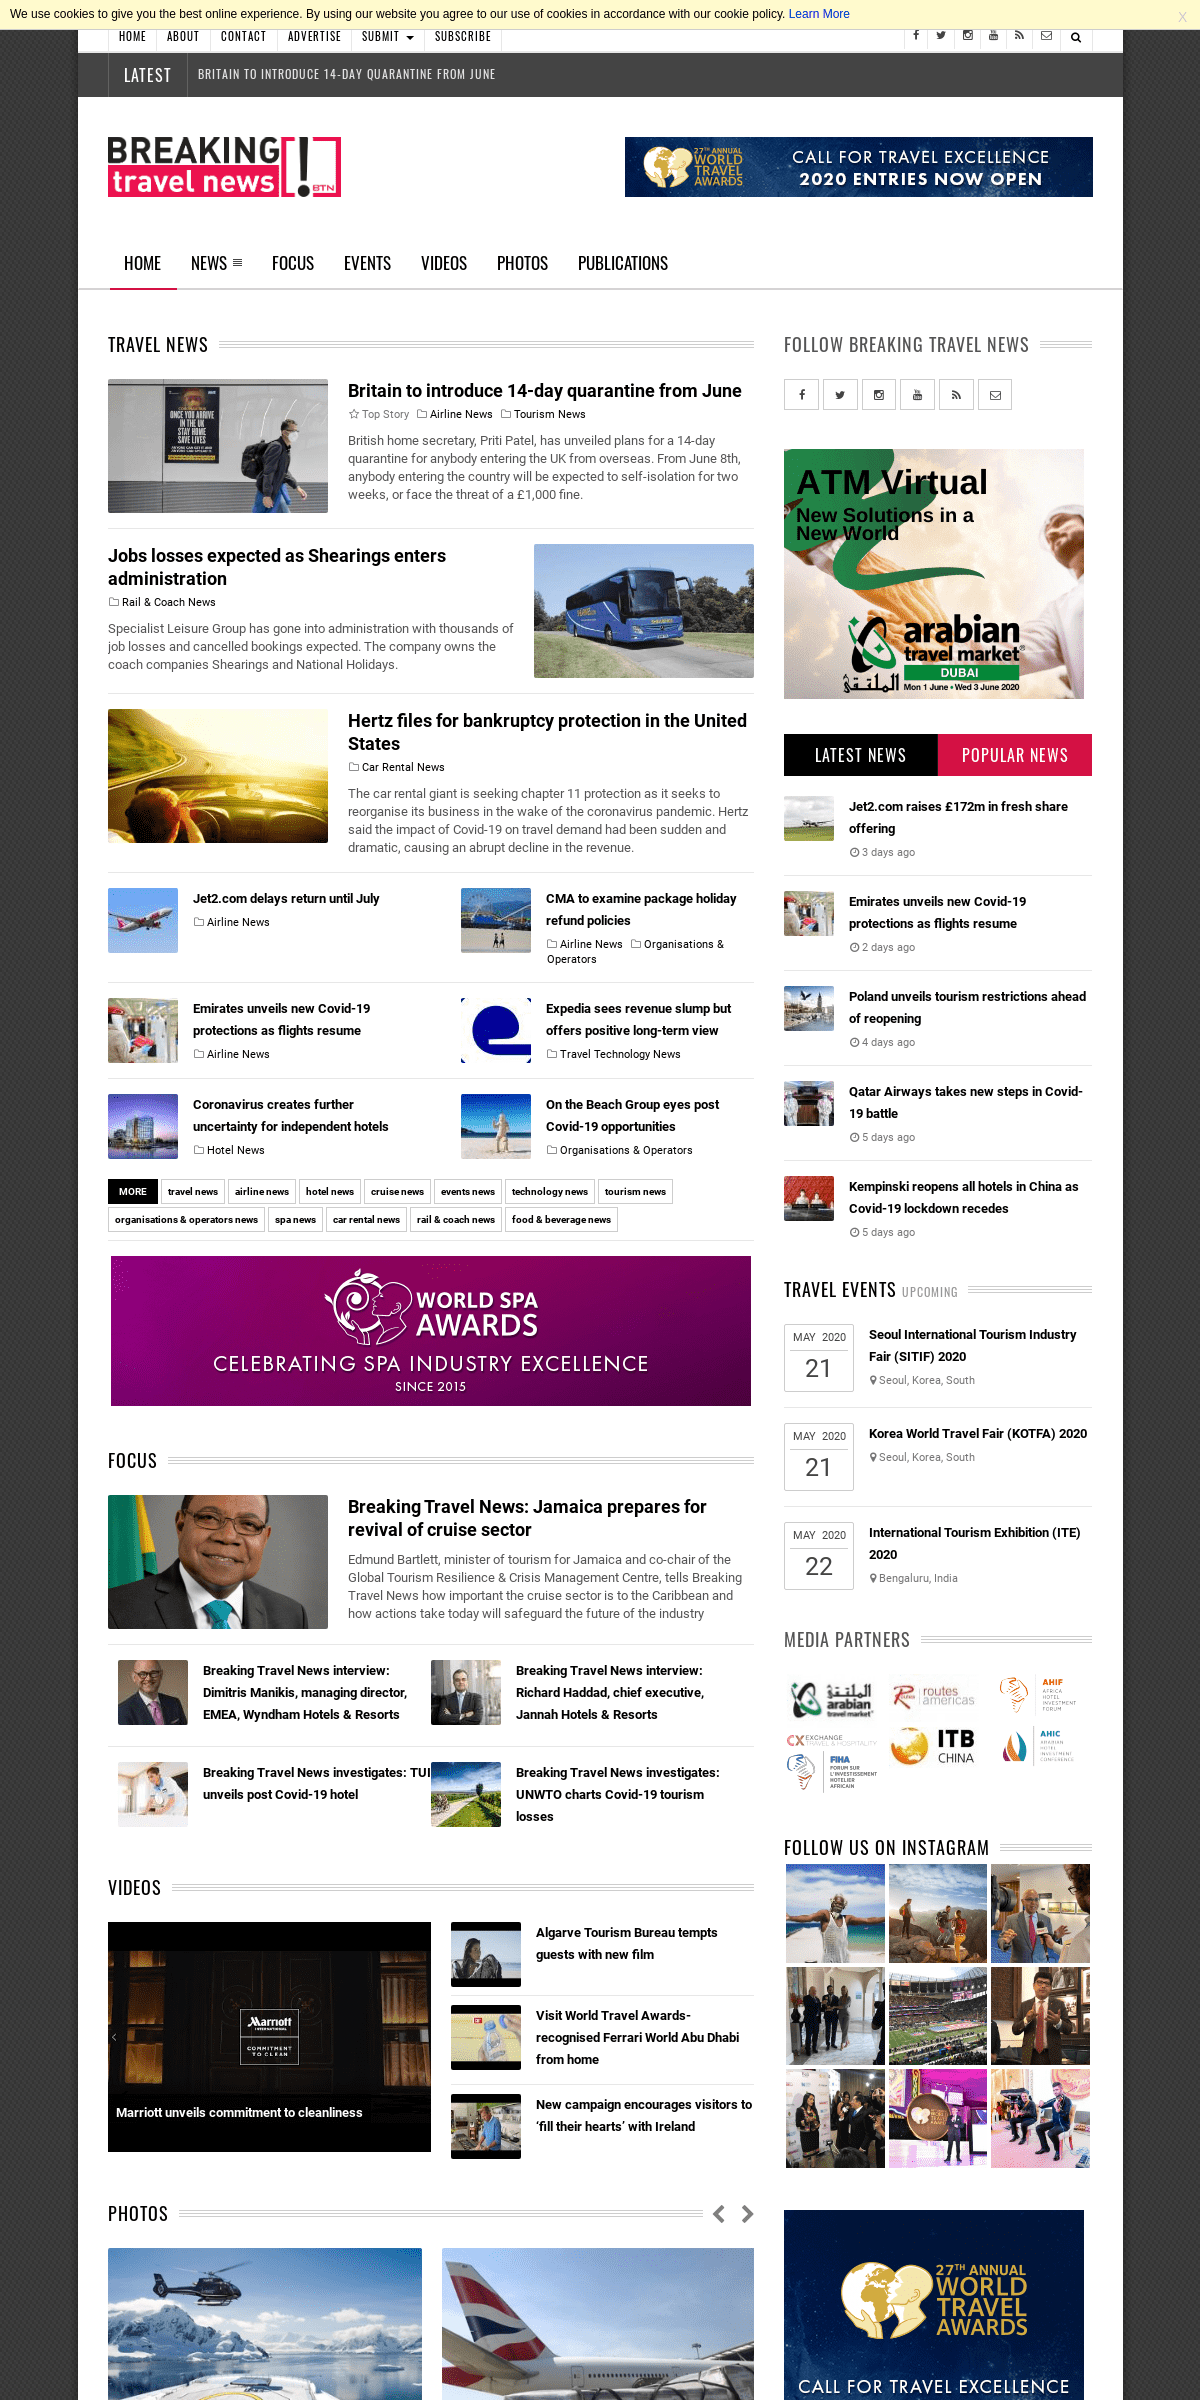 A complete backup of breakingtravelnews.com